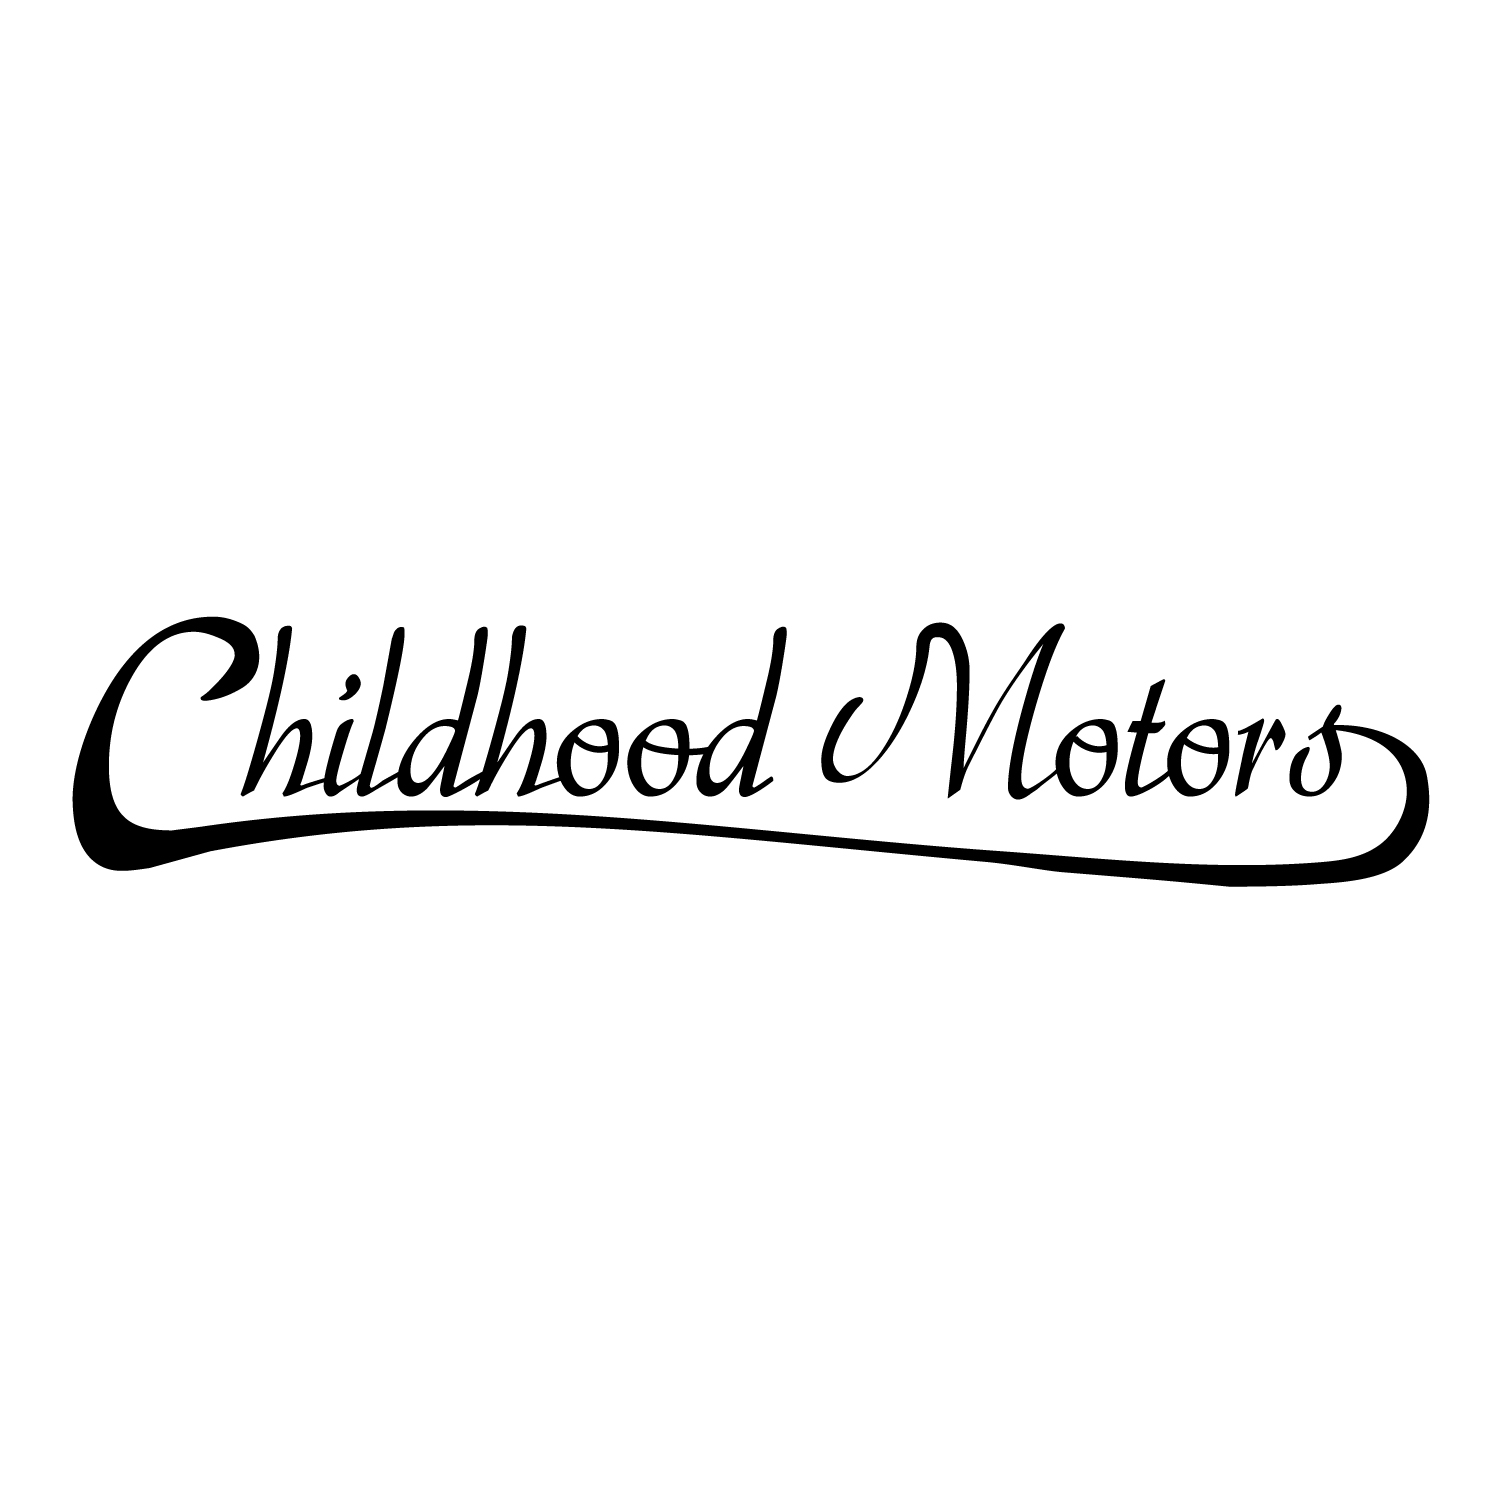 Childhood Motors